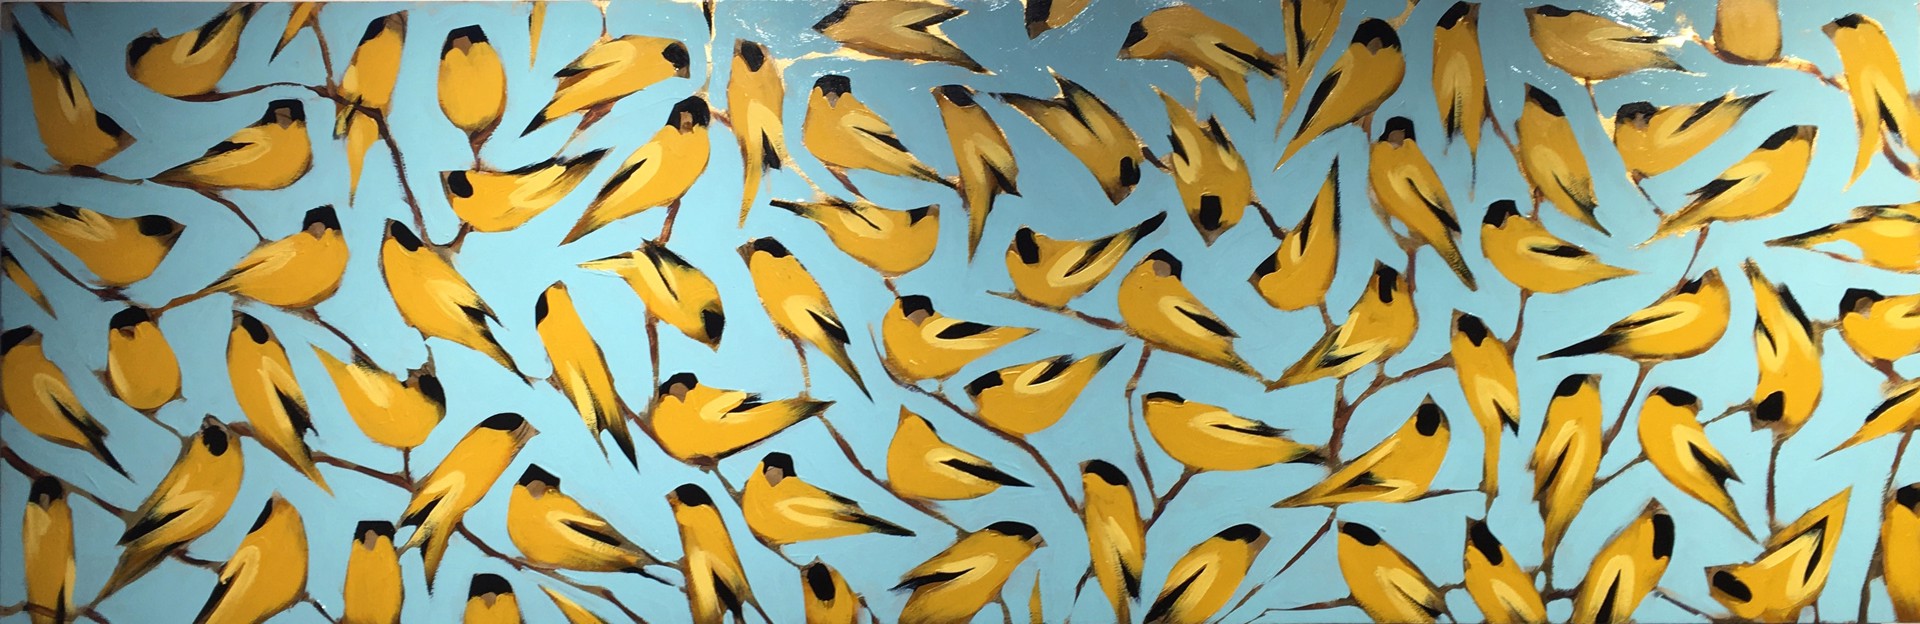 Goldfinches Pano 24x72 by Joseph Bradley